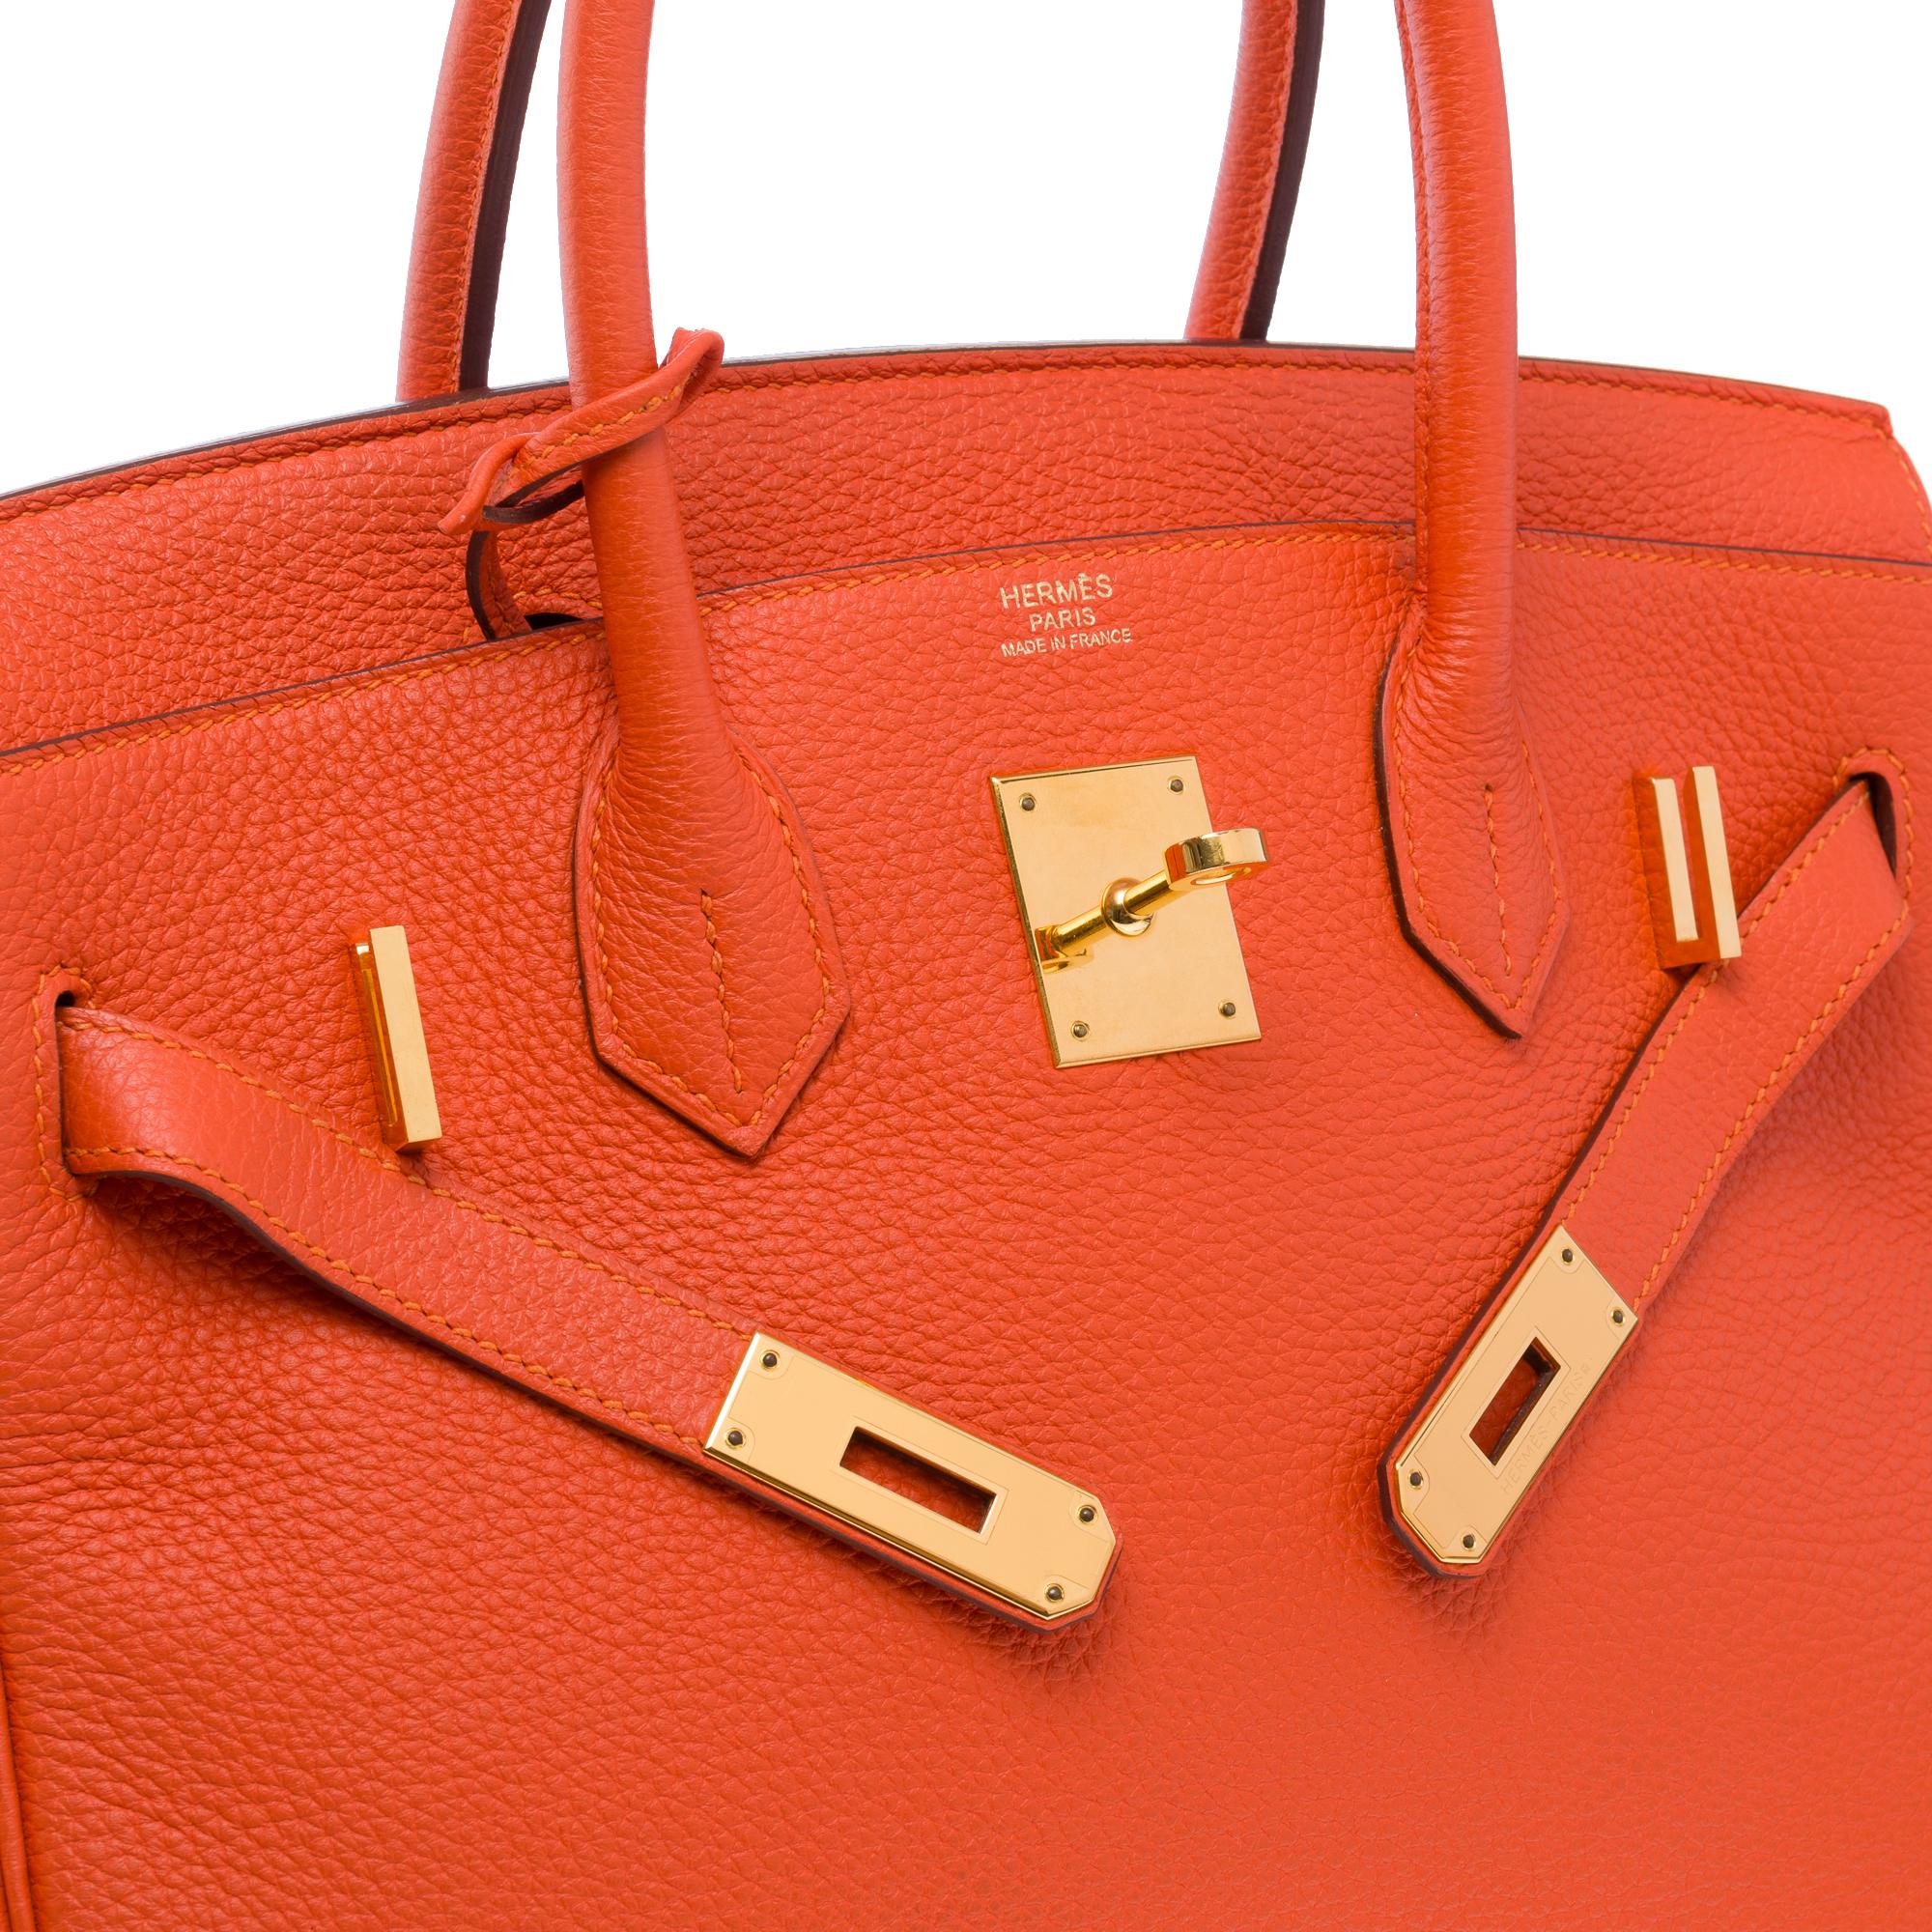 Superb Hermes Birkin 30 handbag in Taurillon Clemence Orange Poppy leather, GHW For Sale 1